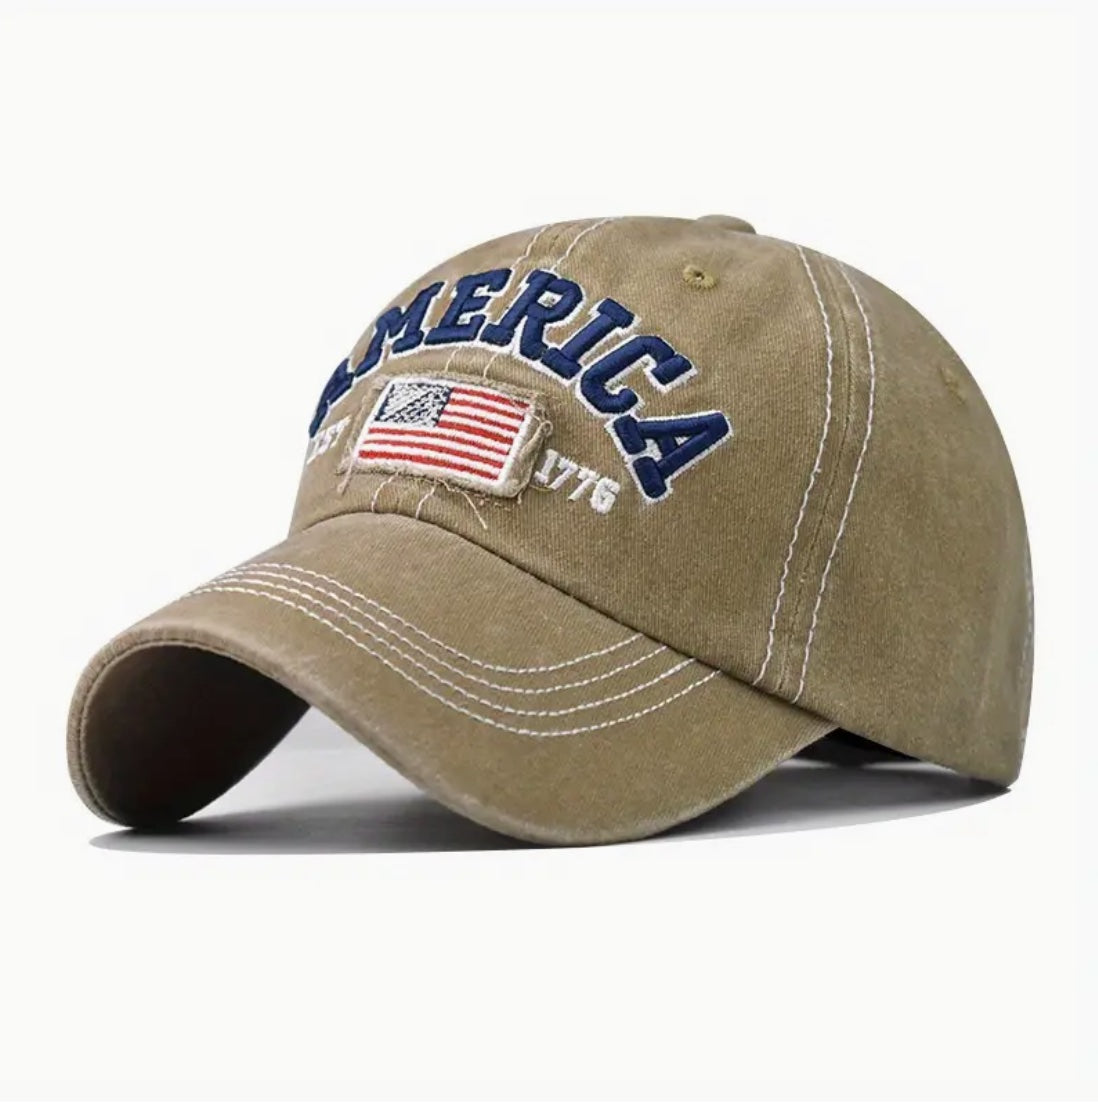 AMERICA EST. 1776 UNISEX VINTAGE DISTRESSED BASEBALL LOW PROFILE BALL CAP HAT